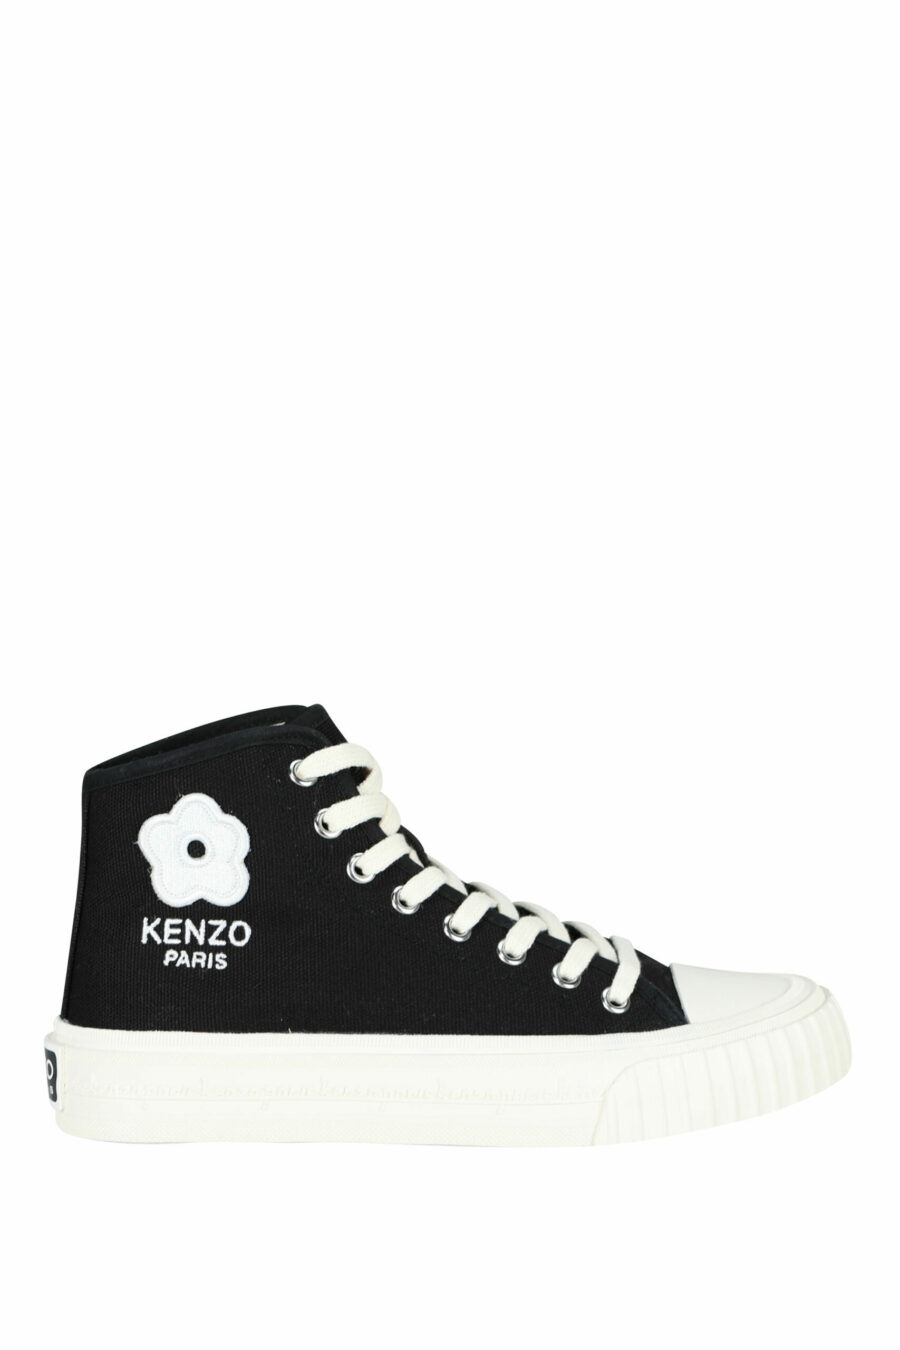 Schwarze High-Top-Turnschuhe "kenzo foxy" mit weißem "boke flower"-Logo - 3612230639515 skaliert